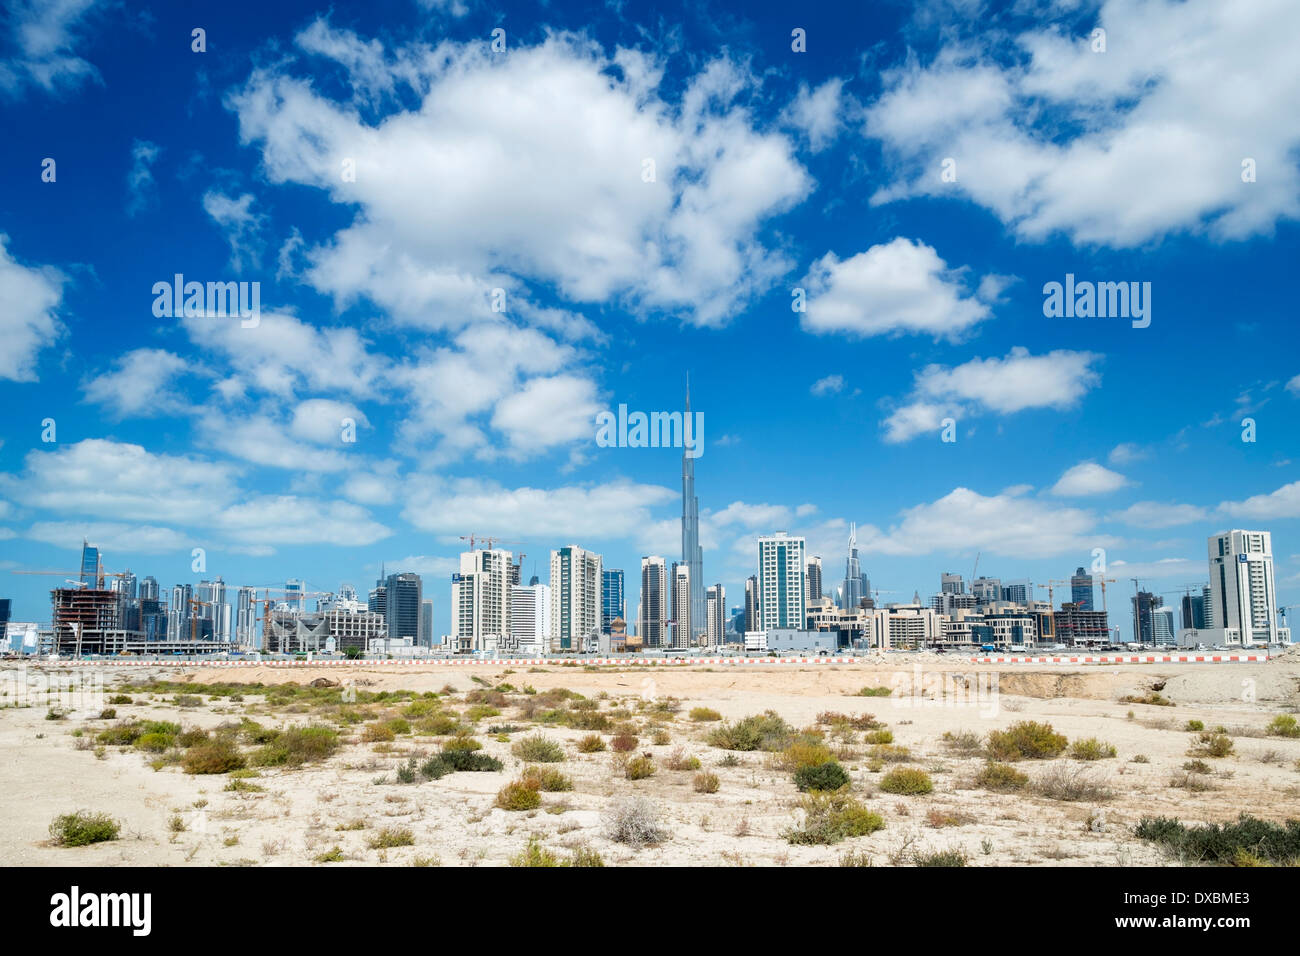 Skyline of Dubai from the desert in United Arab Emirates Stock Photo